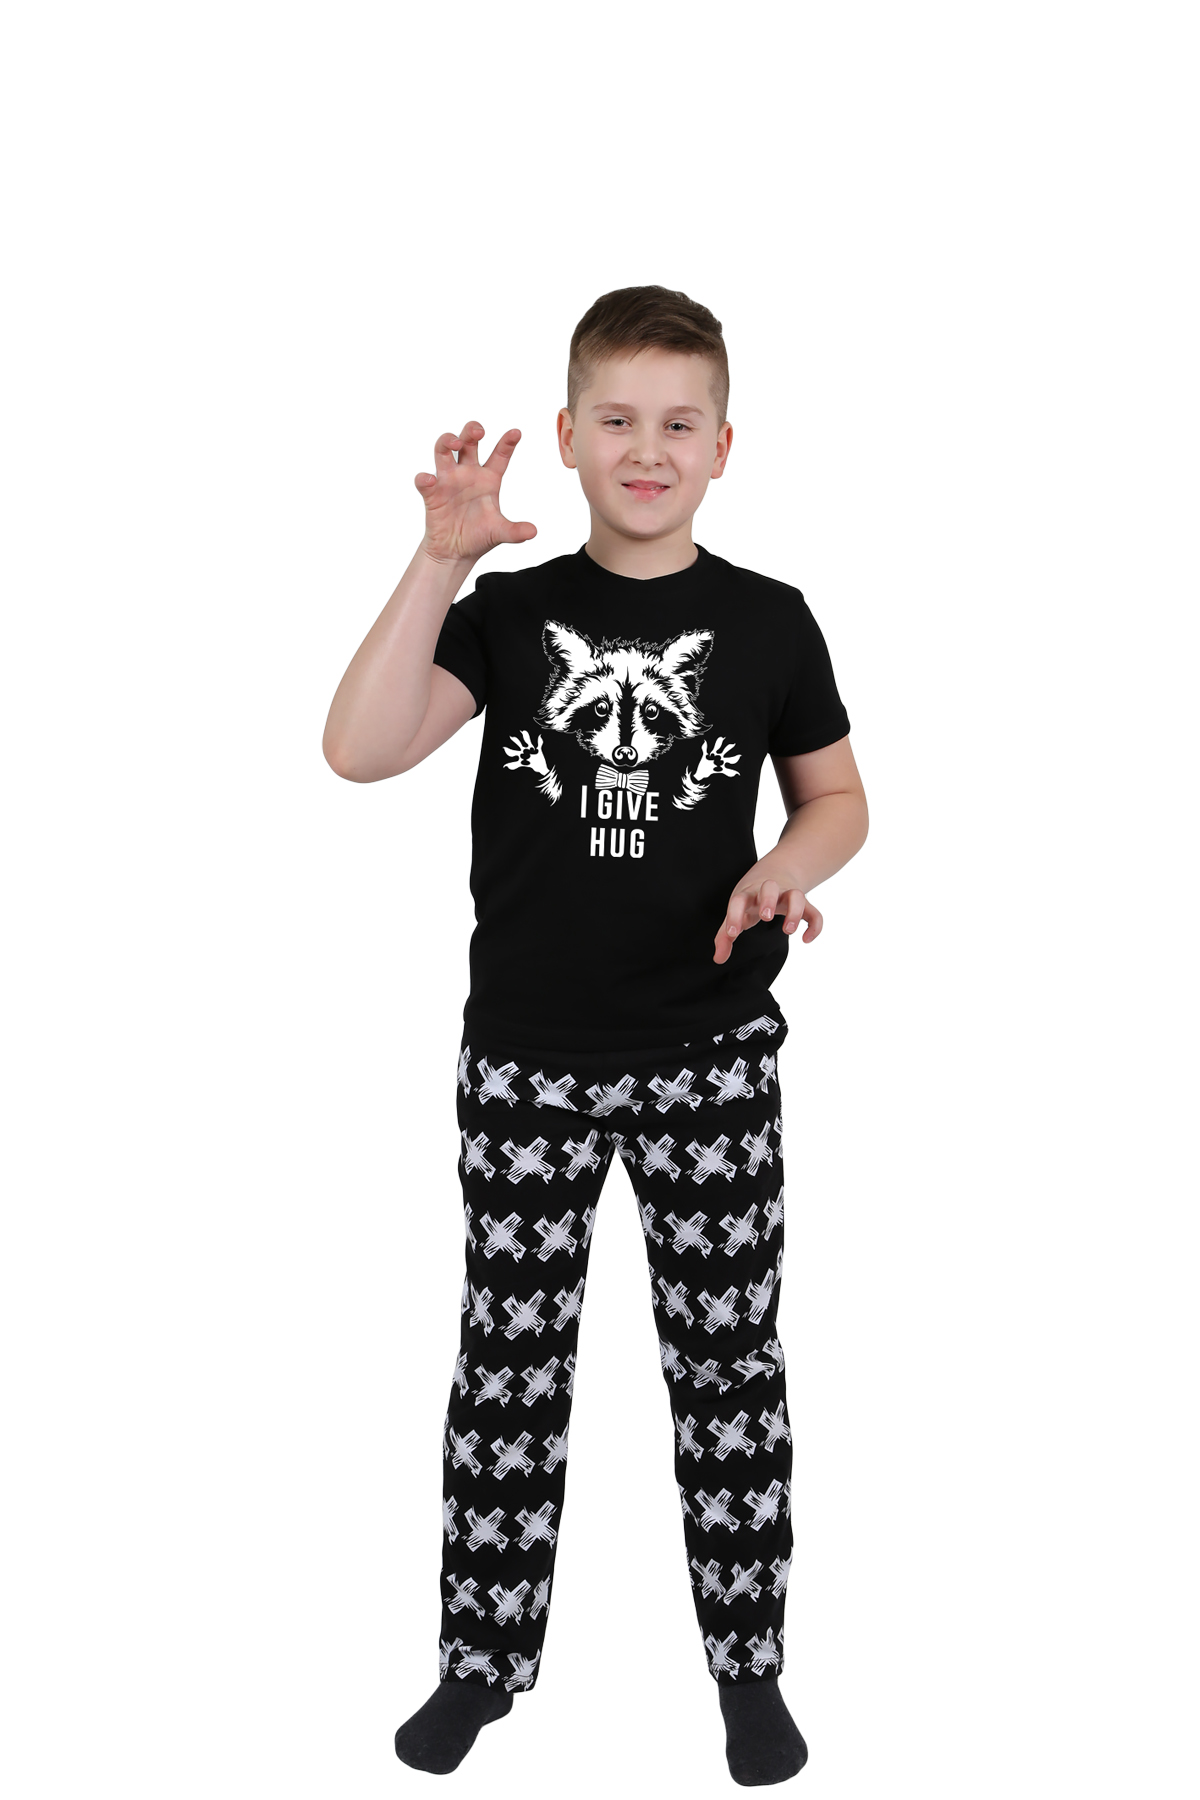 Детская пижама Енотик Цвет: Черный (10 лет), размер 10 лет otj636457 Детская пижама Енотик Цвет: Черный (10 лет) - фото 1